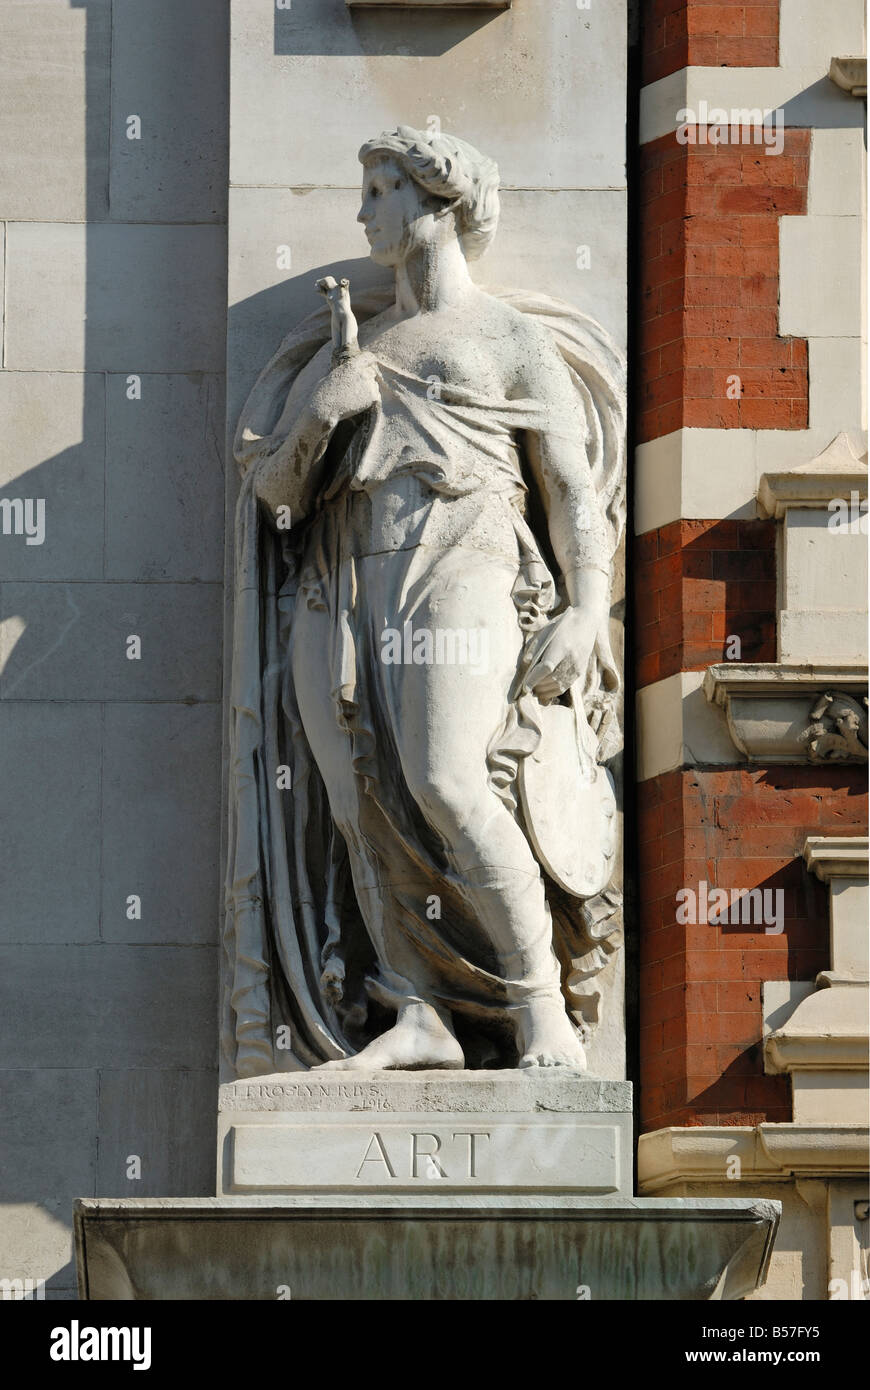 Statue of Art, New Bond Street, London Stock Photo